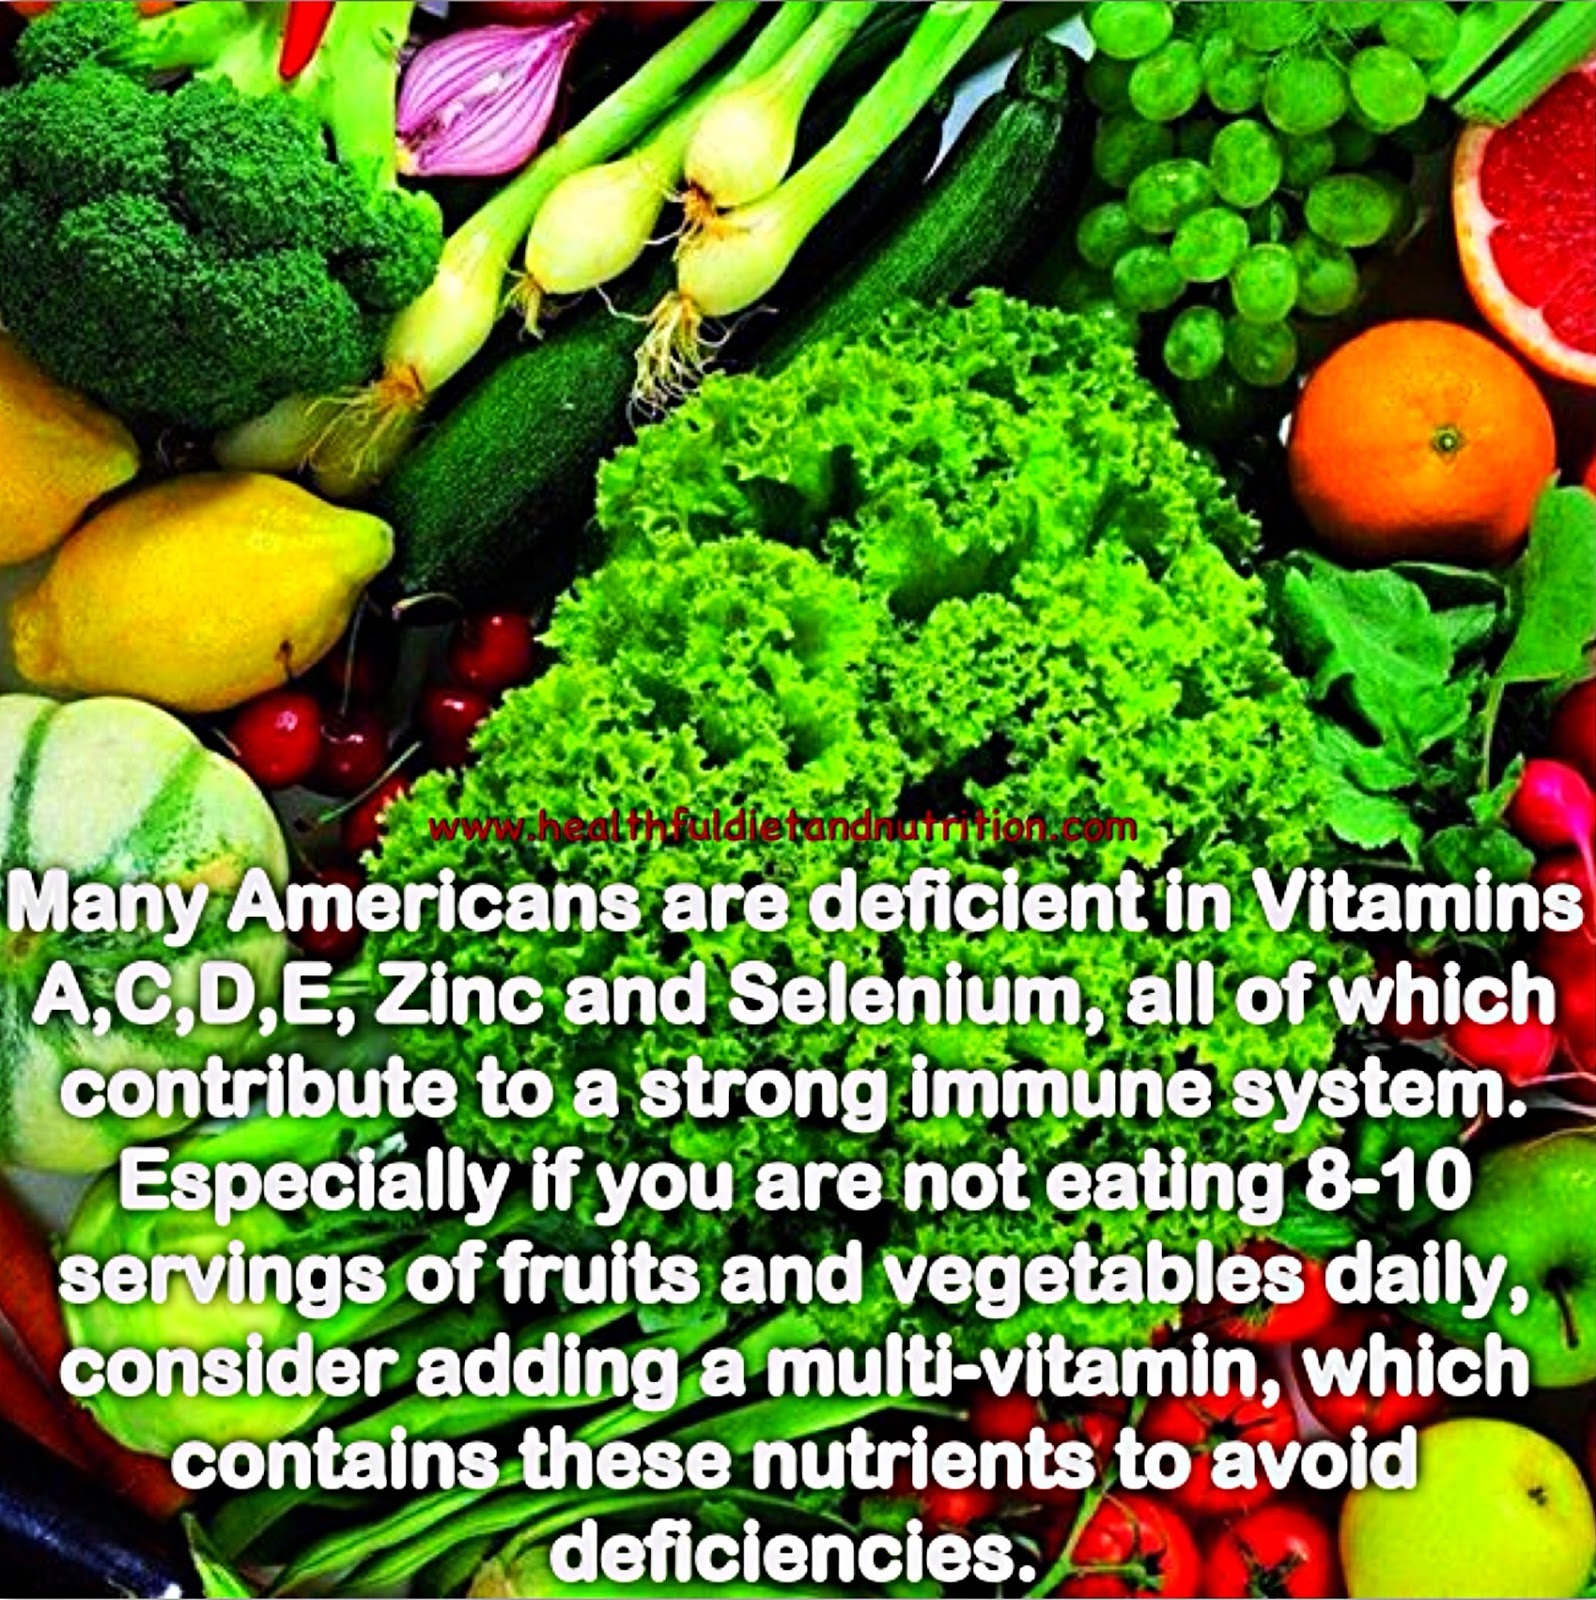 Take Multi-vitamin to Avoid Deficiencies